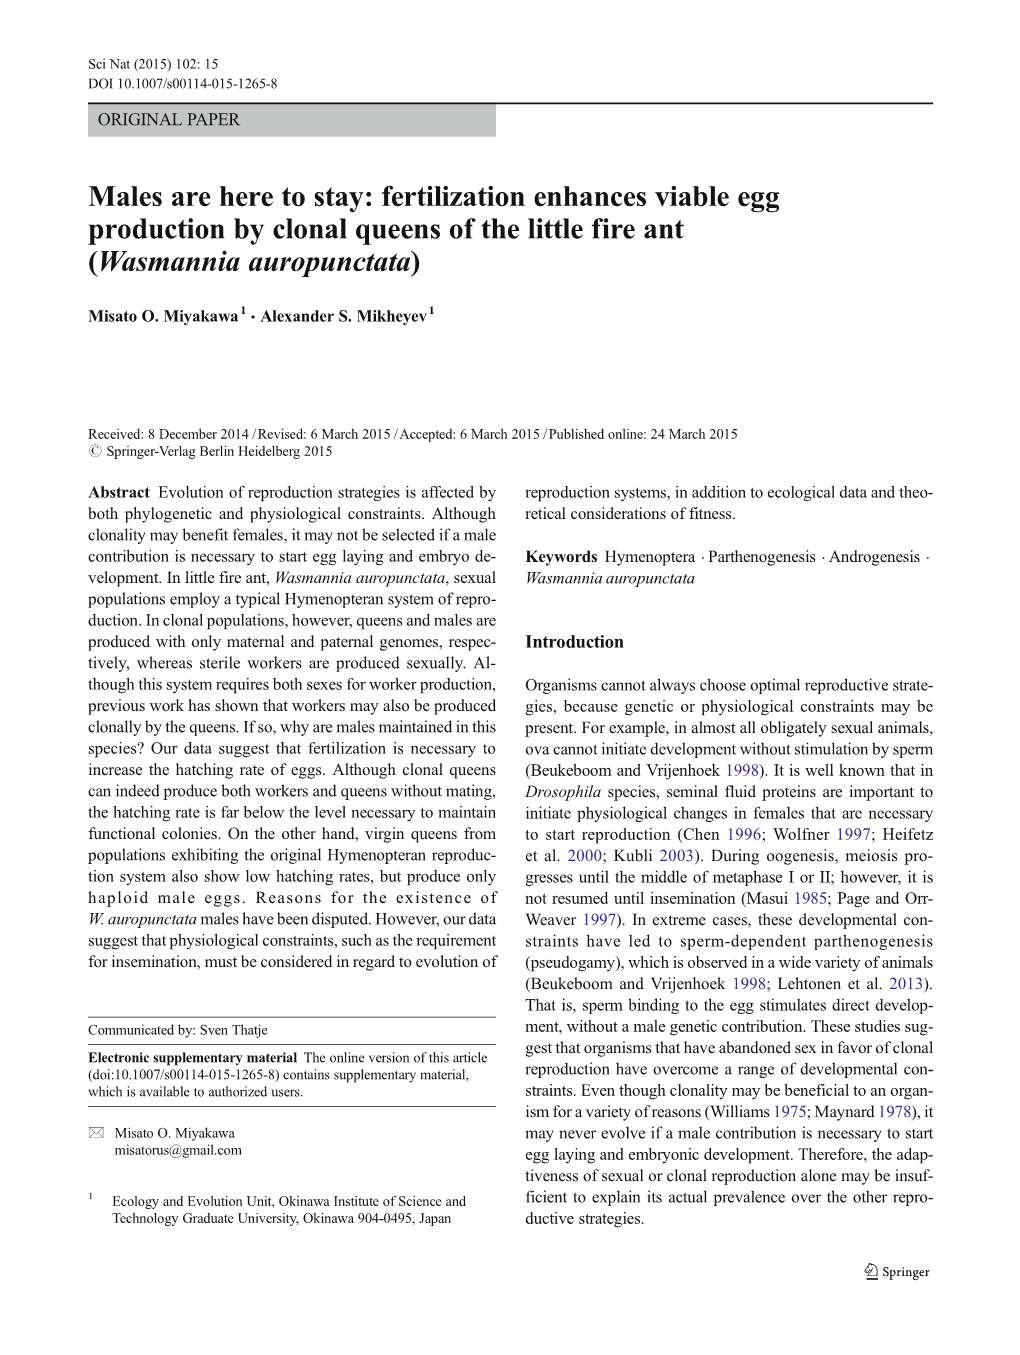 Fertilization Enhances Viable Egg Production by Clonal Queens of the Little Fire Ant (Wasmannia Auropunctata)